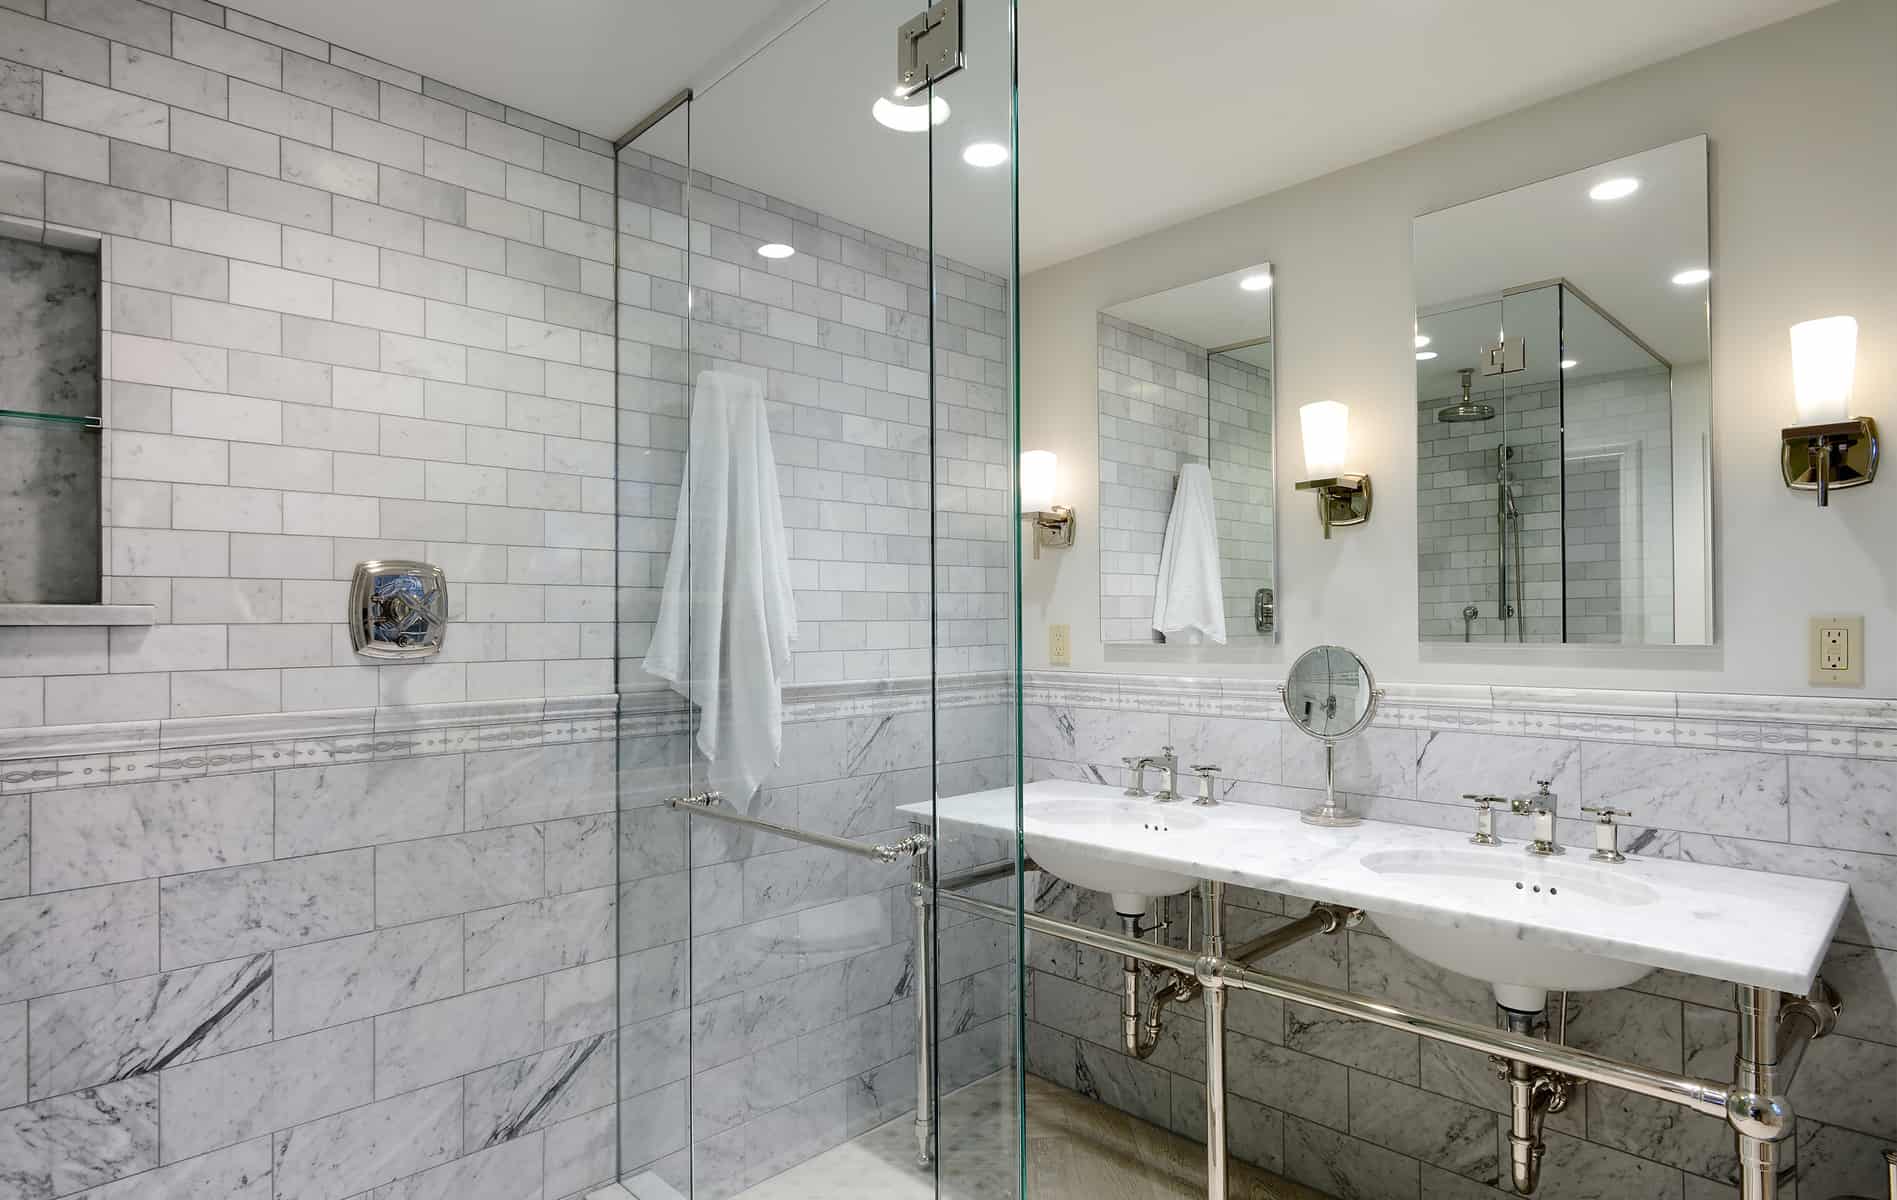 7 Smart Strategies for Bathroom Remodeling